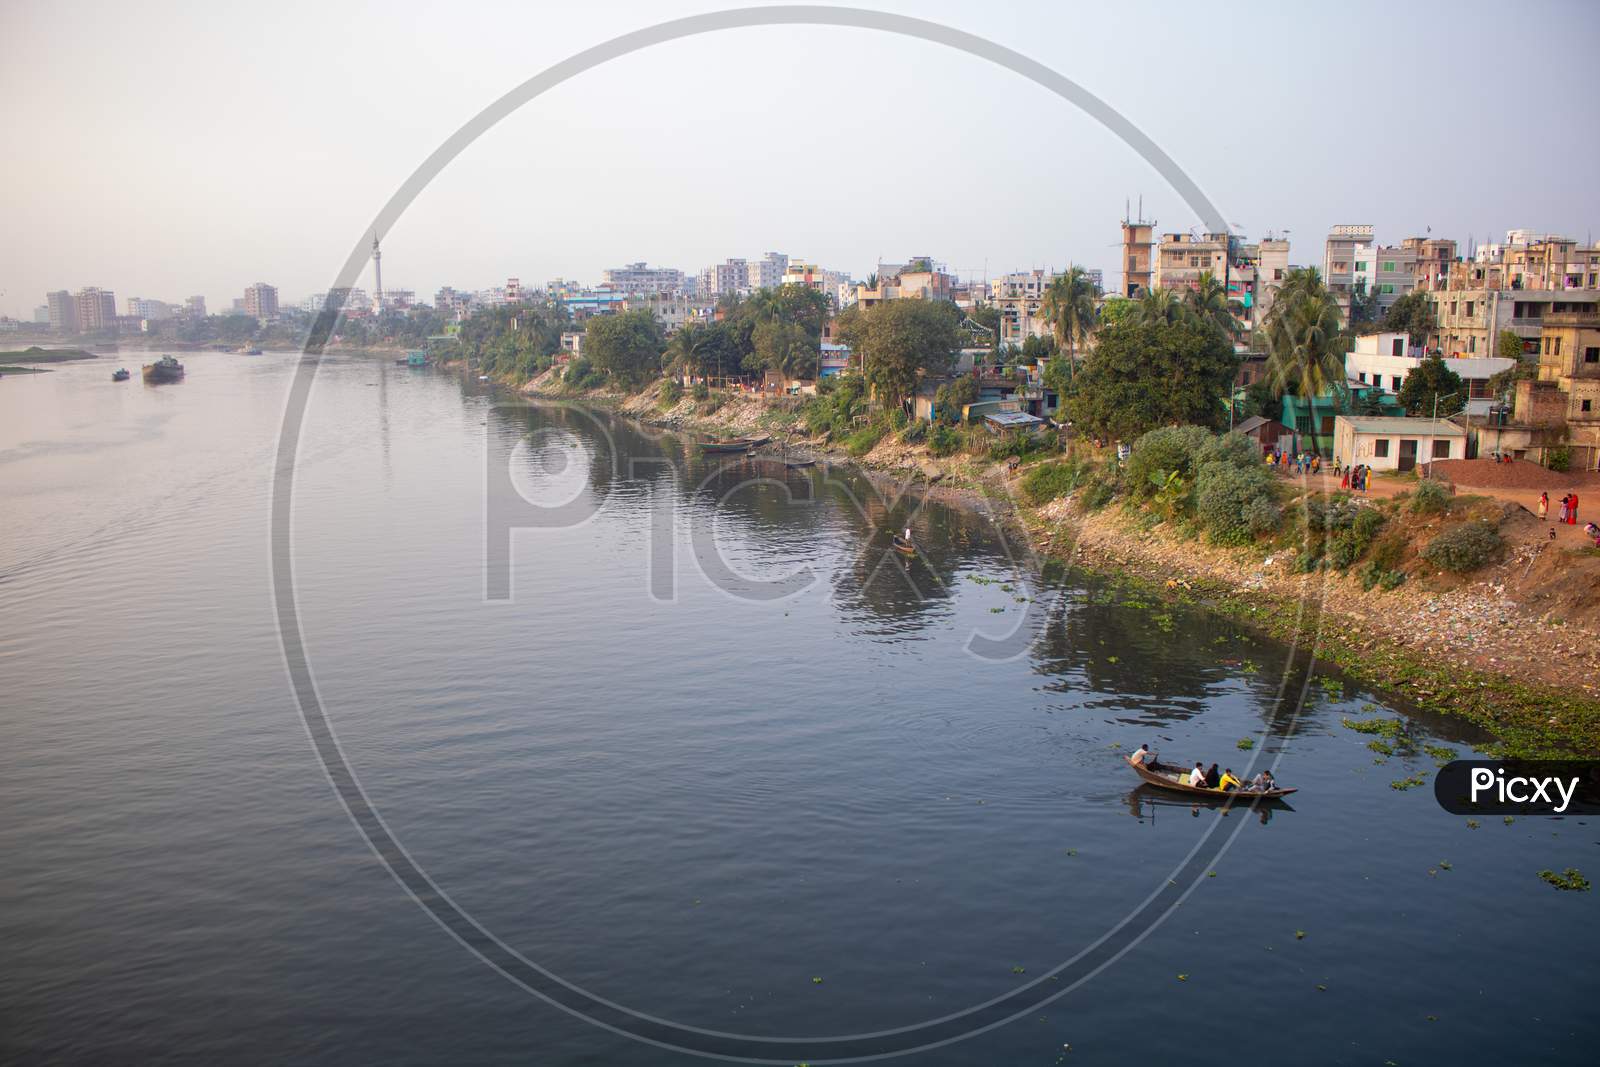 Picture Of Dhaka City On The Banks Of River Buriganga.The River Buriganga Has Enhanced The Beauty Of The Capital City Dhaka.